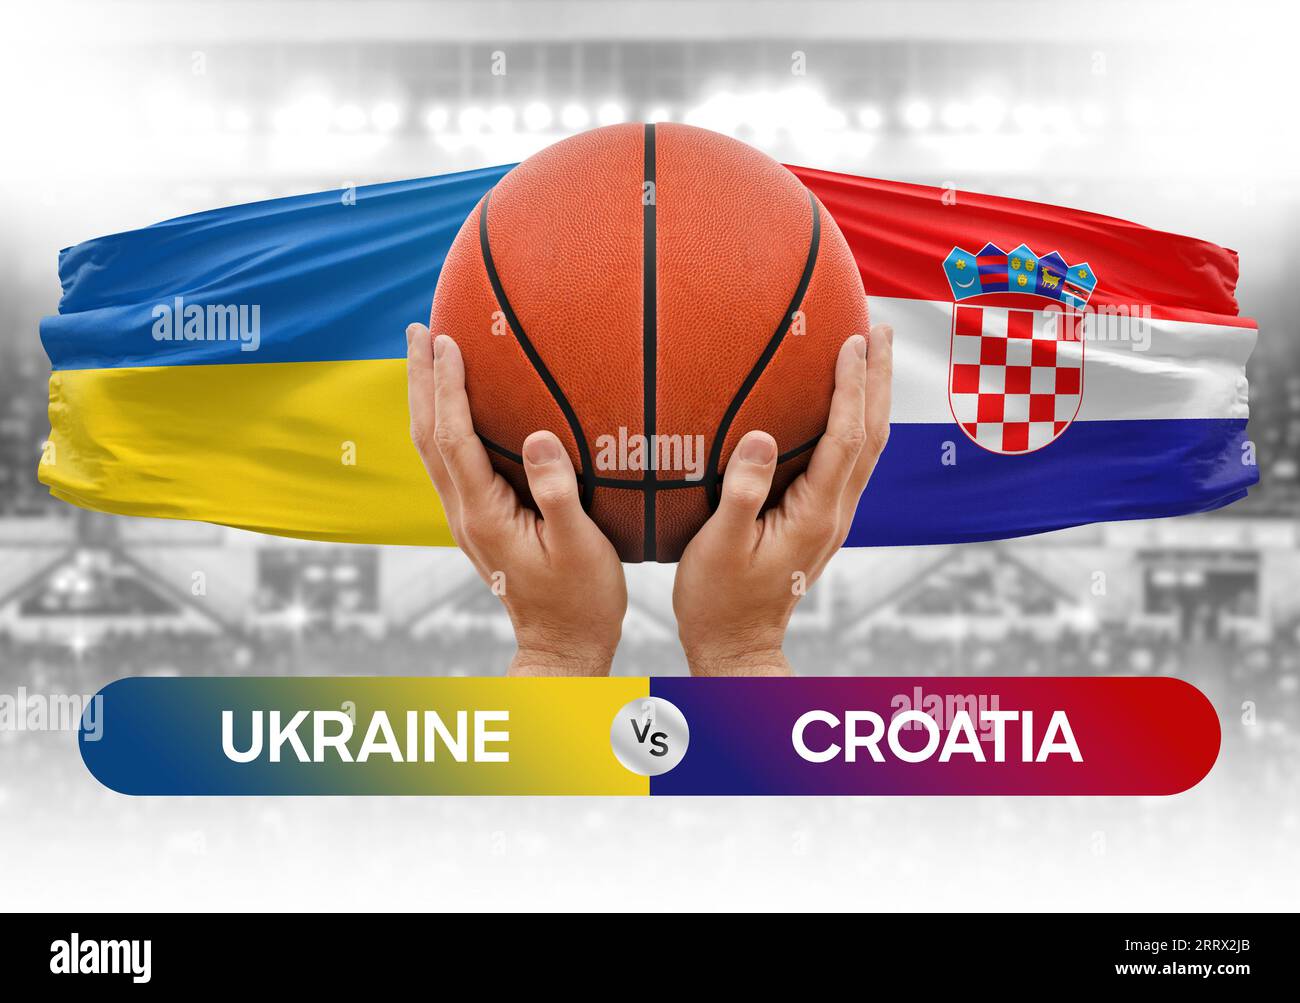 Ukraine vs Croatia national basketball teams basket ball match competition cup concept image Stock Photo